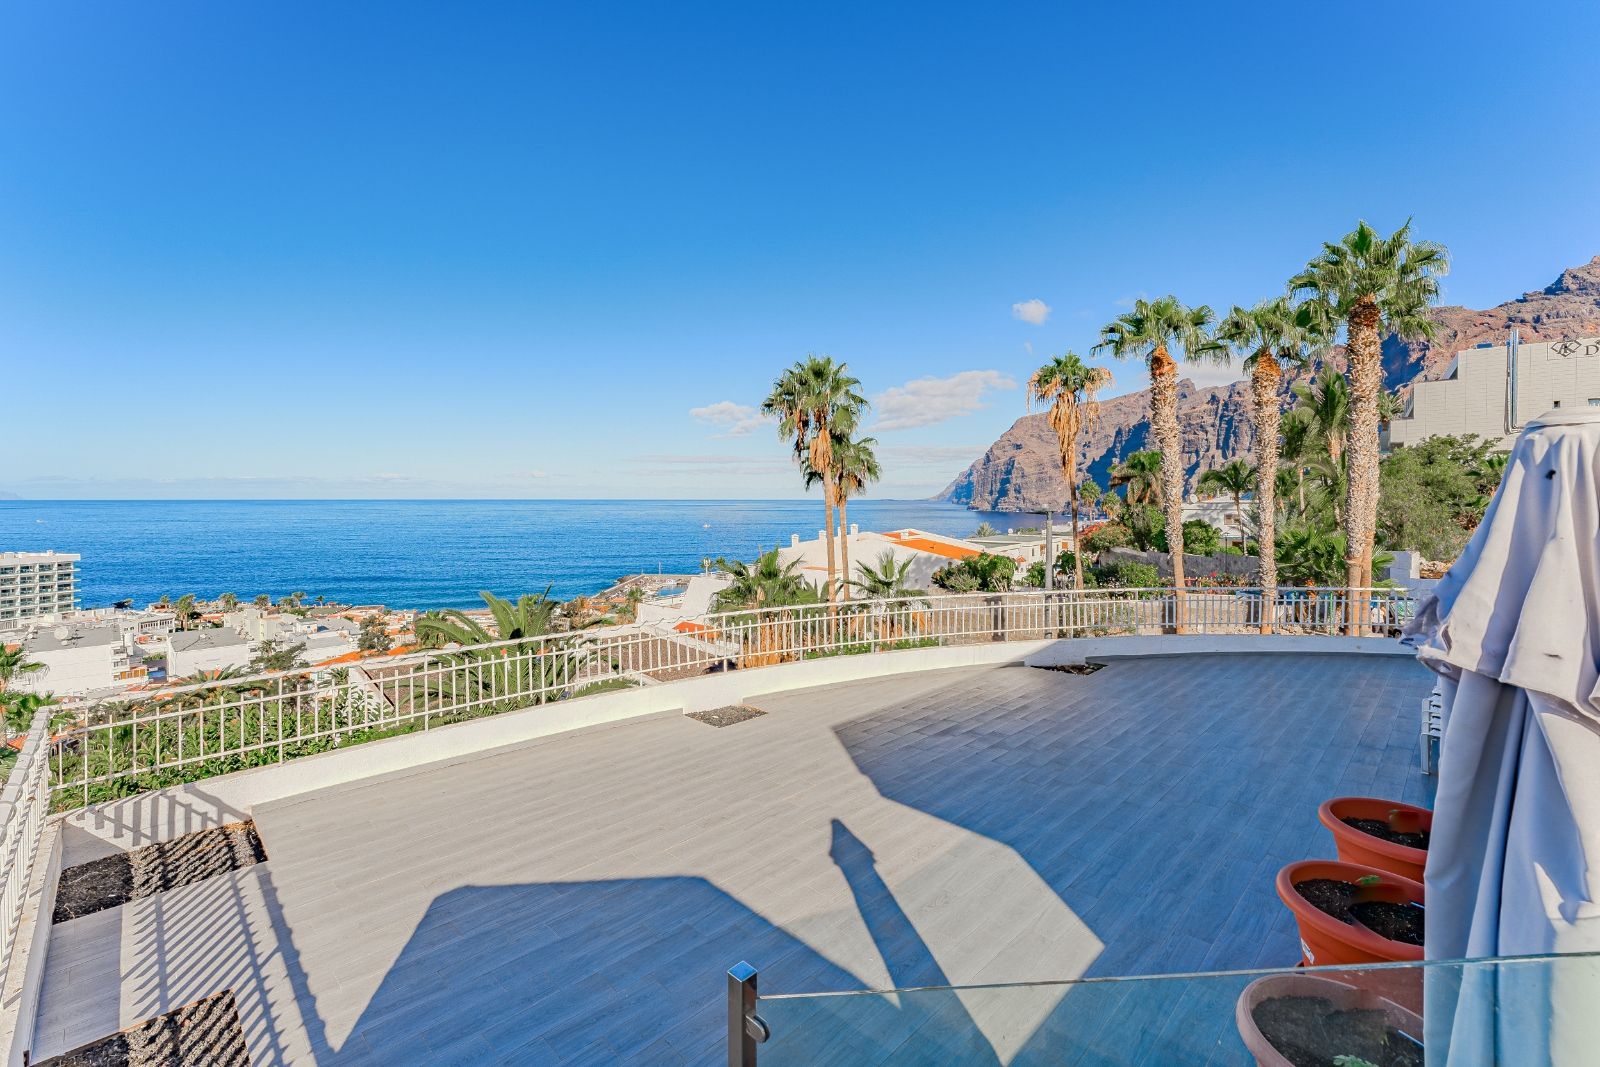 Villa for sale in Tenerife 8